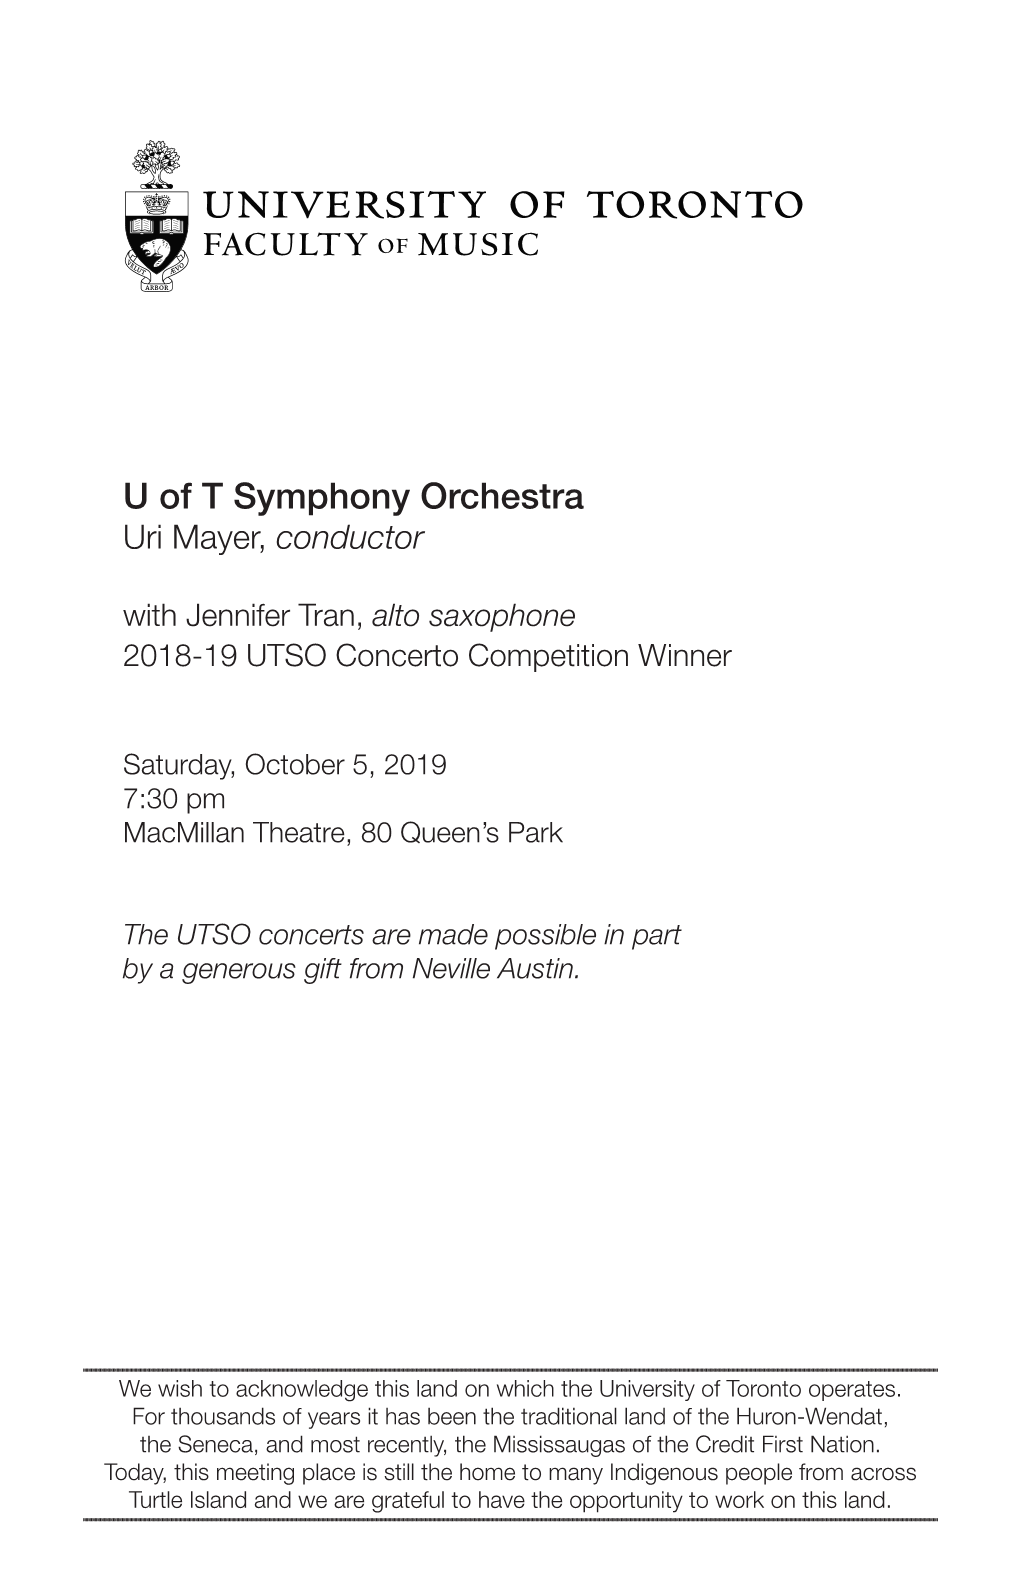 U of T Symphony Orchestra Uri Mayer, Conductor